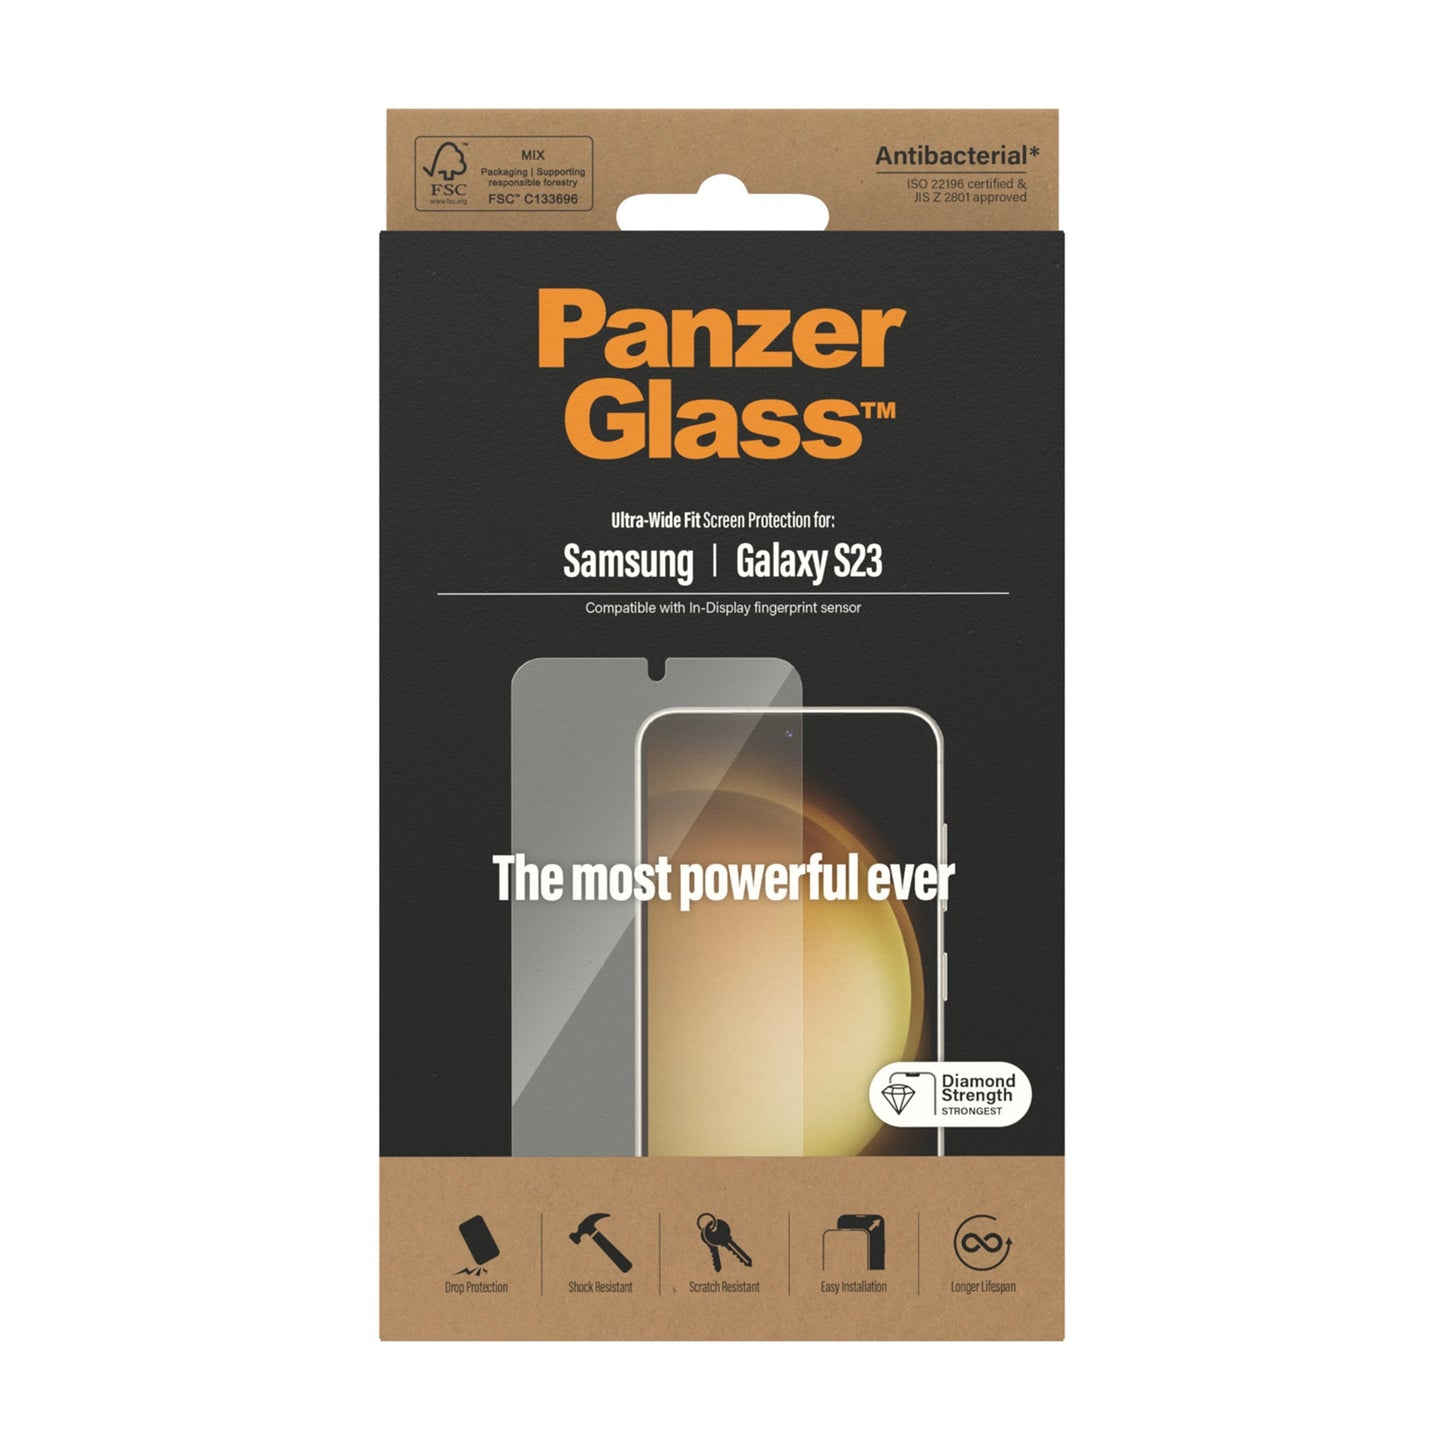 PanzerGlass™ Screen Protector Samsung Galaxy S23 | Ultra-Wide Fit 3